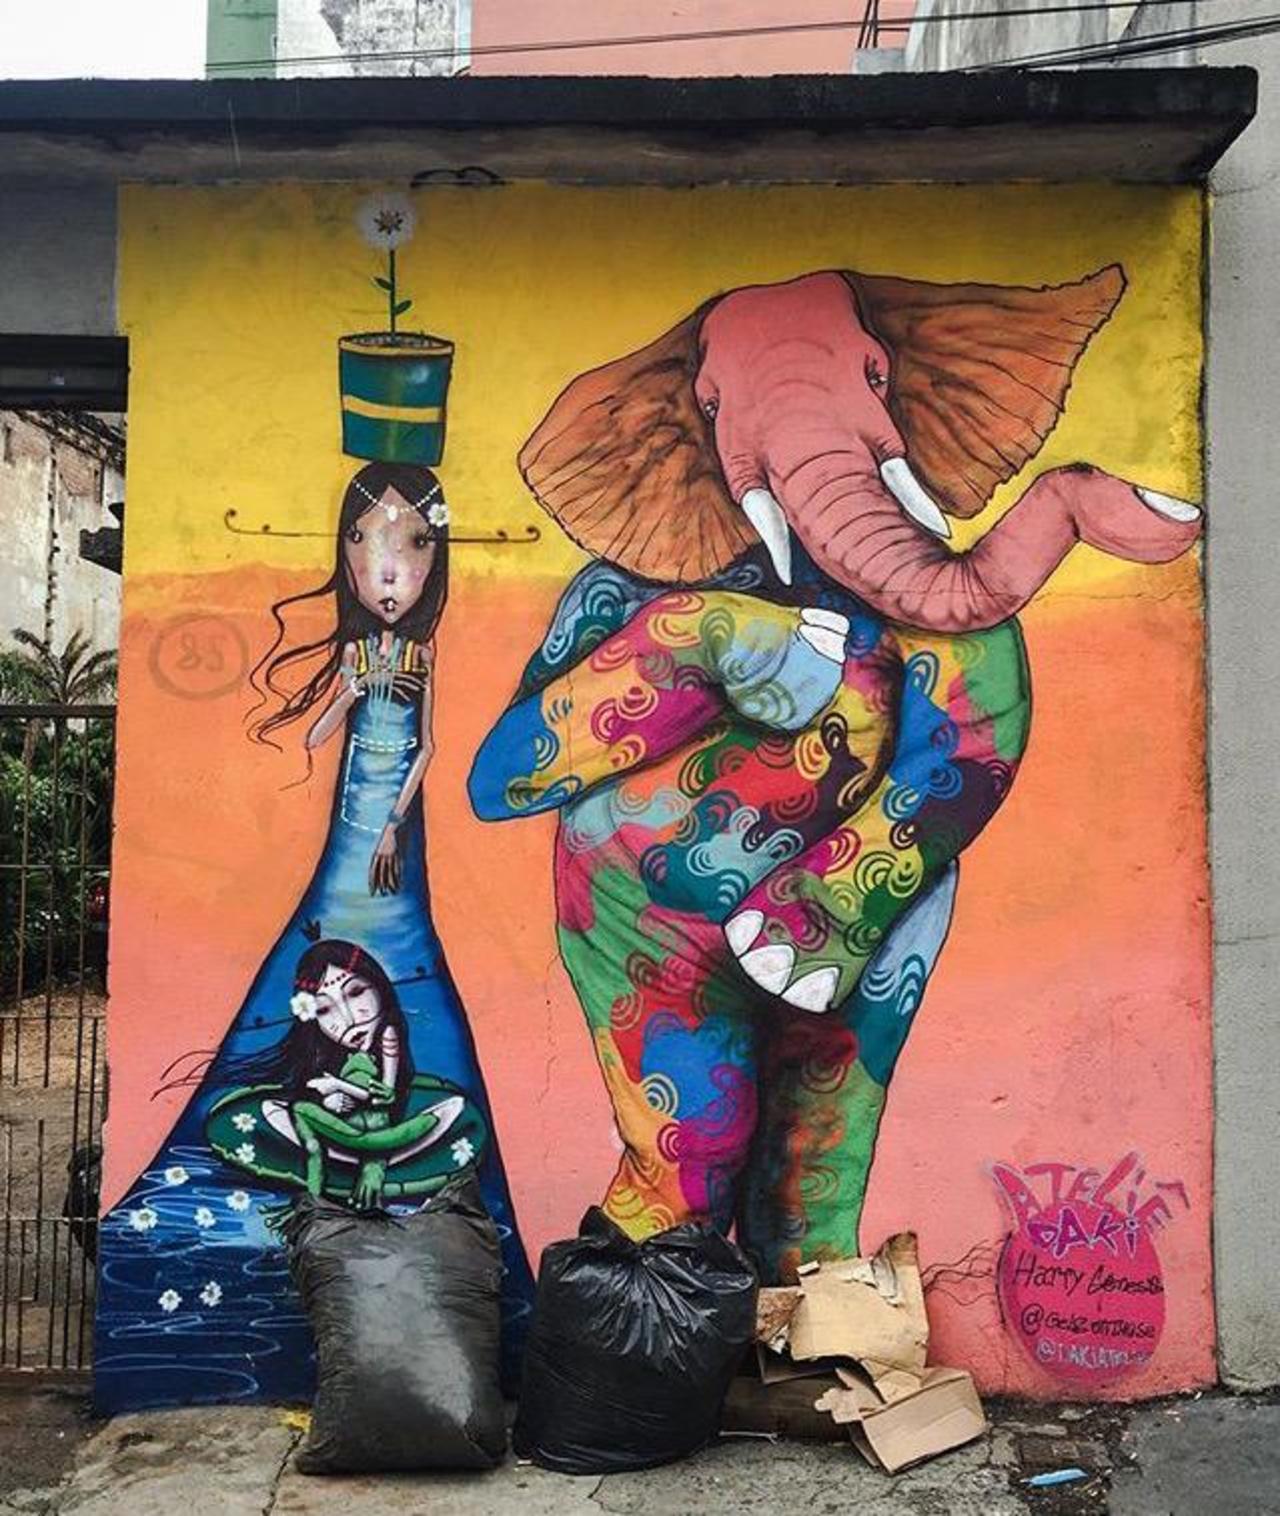 Street Art by Harry Geneis & Gelson in São Paulo #art #mural #graffiti #streetart http://t.co/SlLbhuMZfD … … … …… http://twitter.com/charlesjackso14/status/648021497819328512